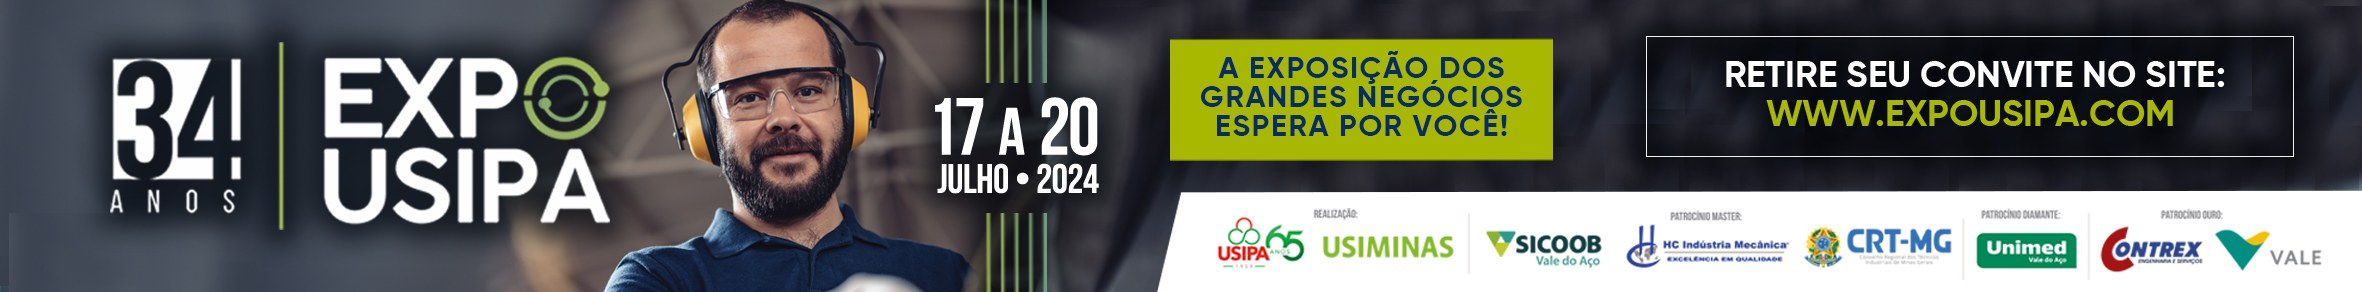 EXPO USIPA PERSONAGEM 1 02  - 728X90